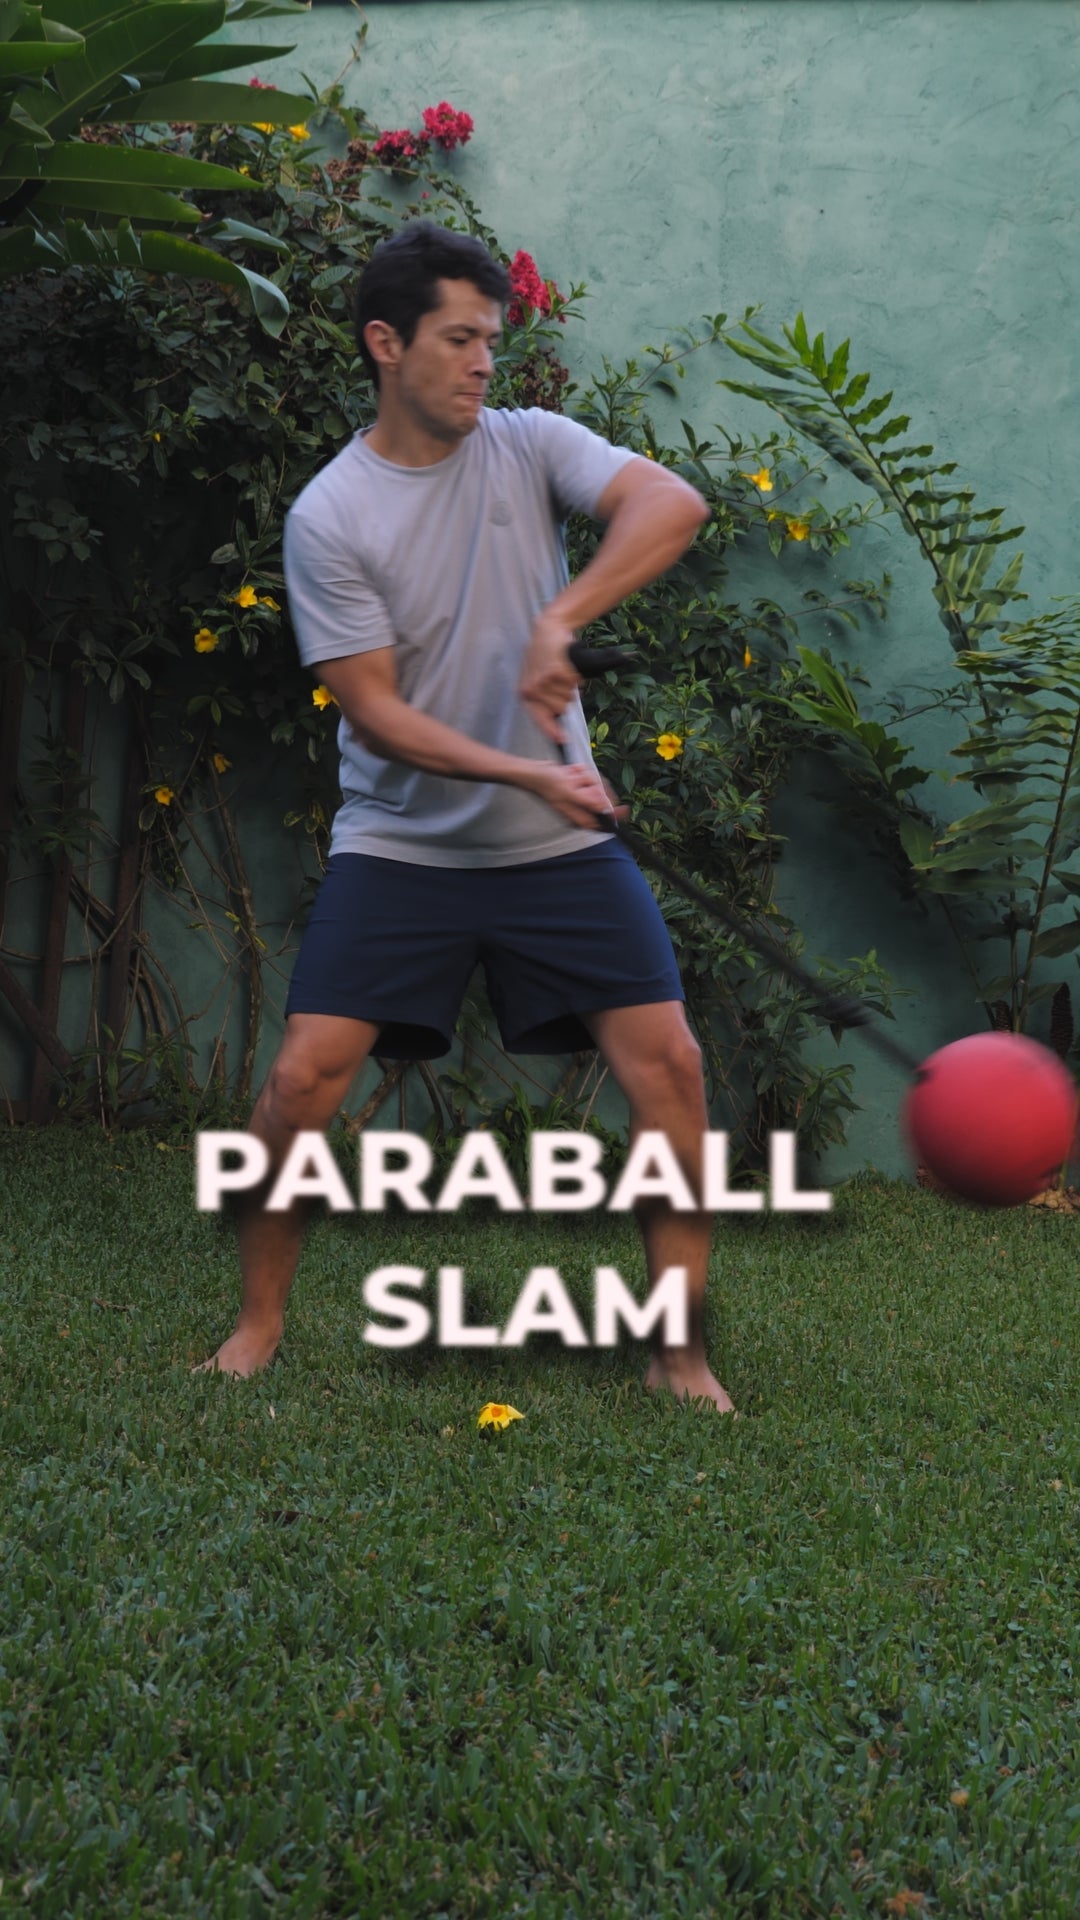 HOW TO DO A PARABALL SLAM